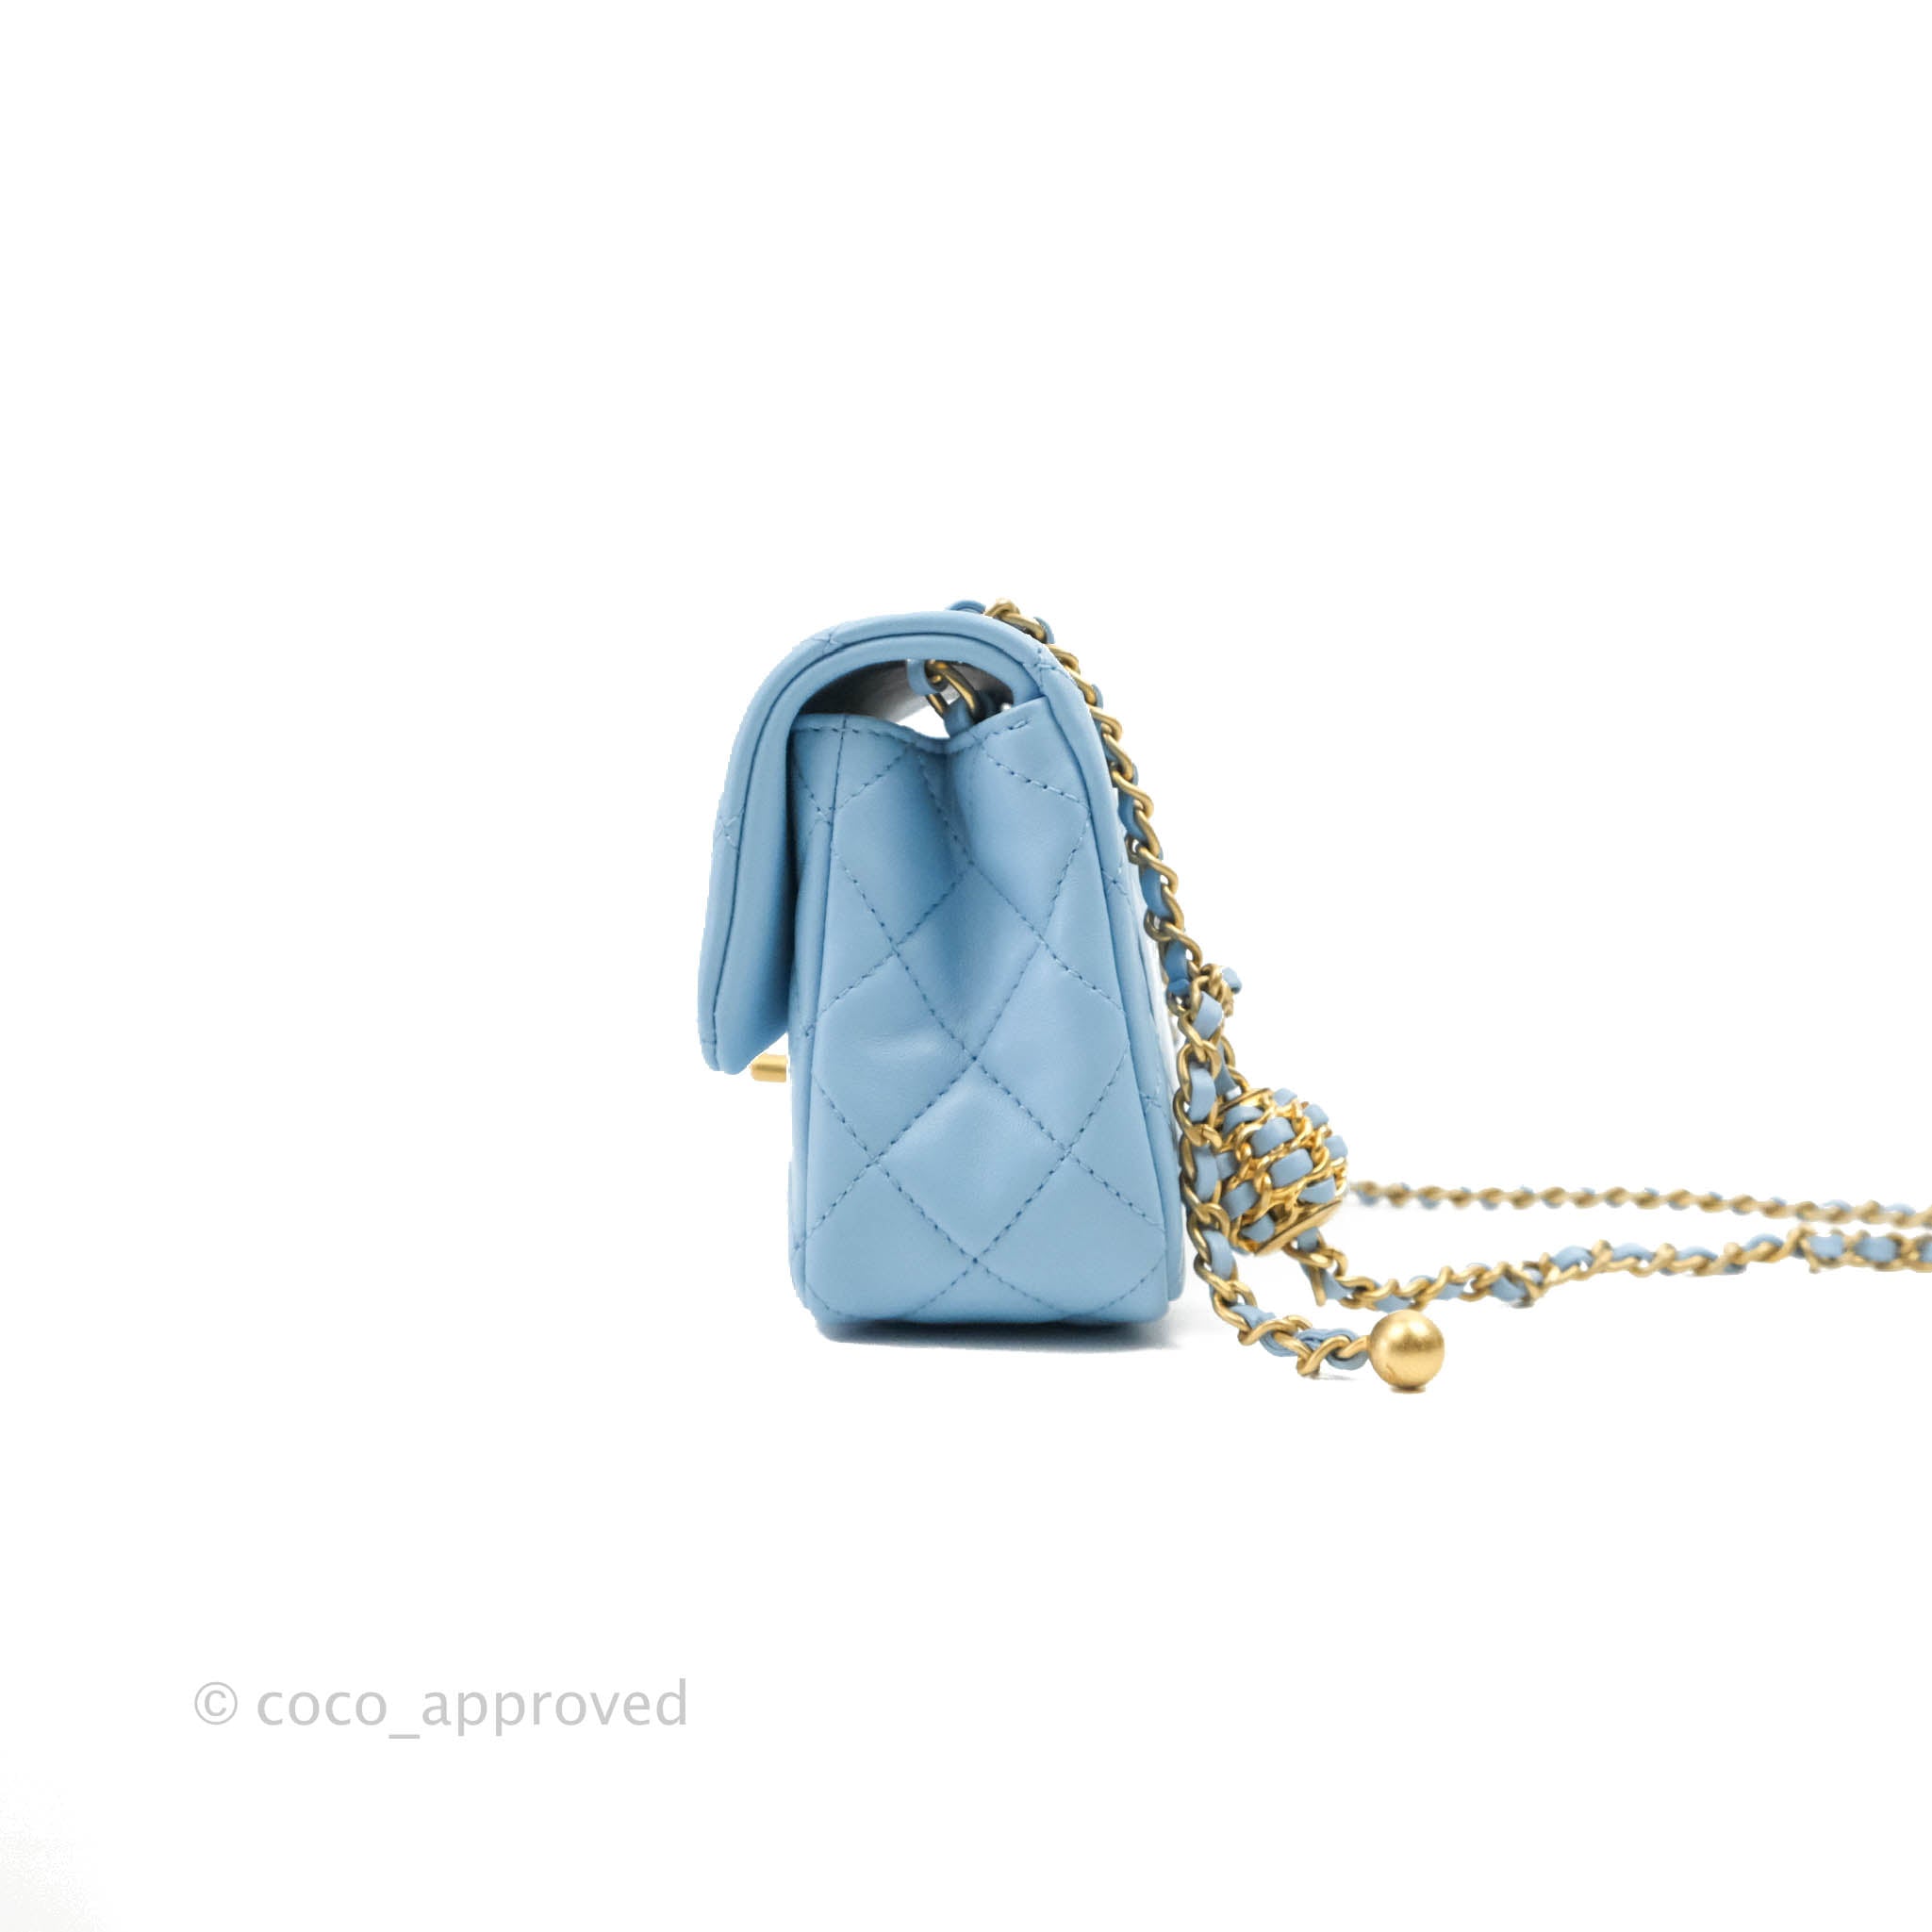 Chanel Pearl Crush Phone Bag, Lambskin, Blue GHW - Laulay Luxury